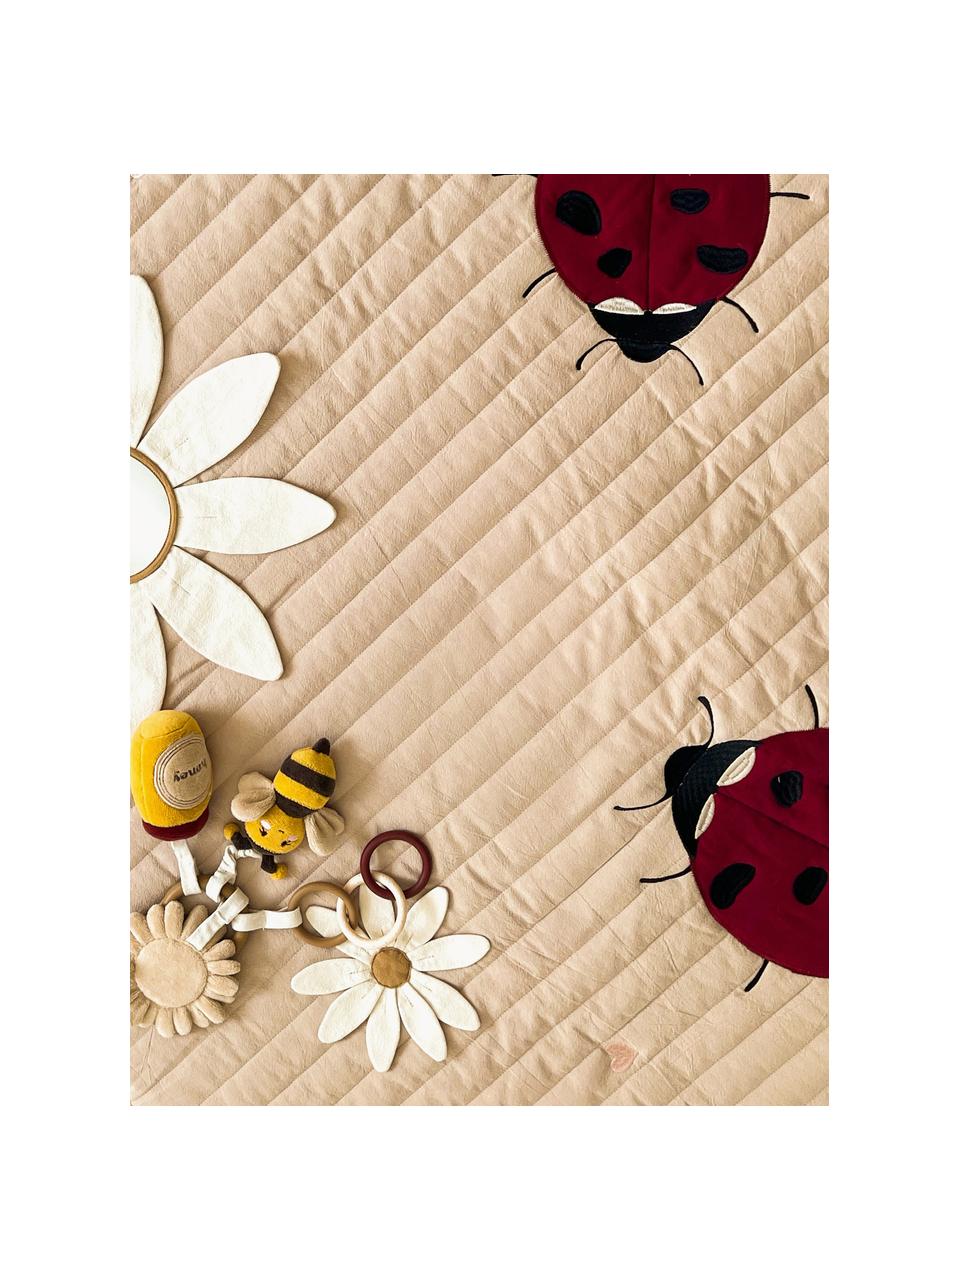 Wattierte Spieldecke Ladybug, Baumwolle, Beige, Mehrfarbig, B 120 x L 120 cm